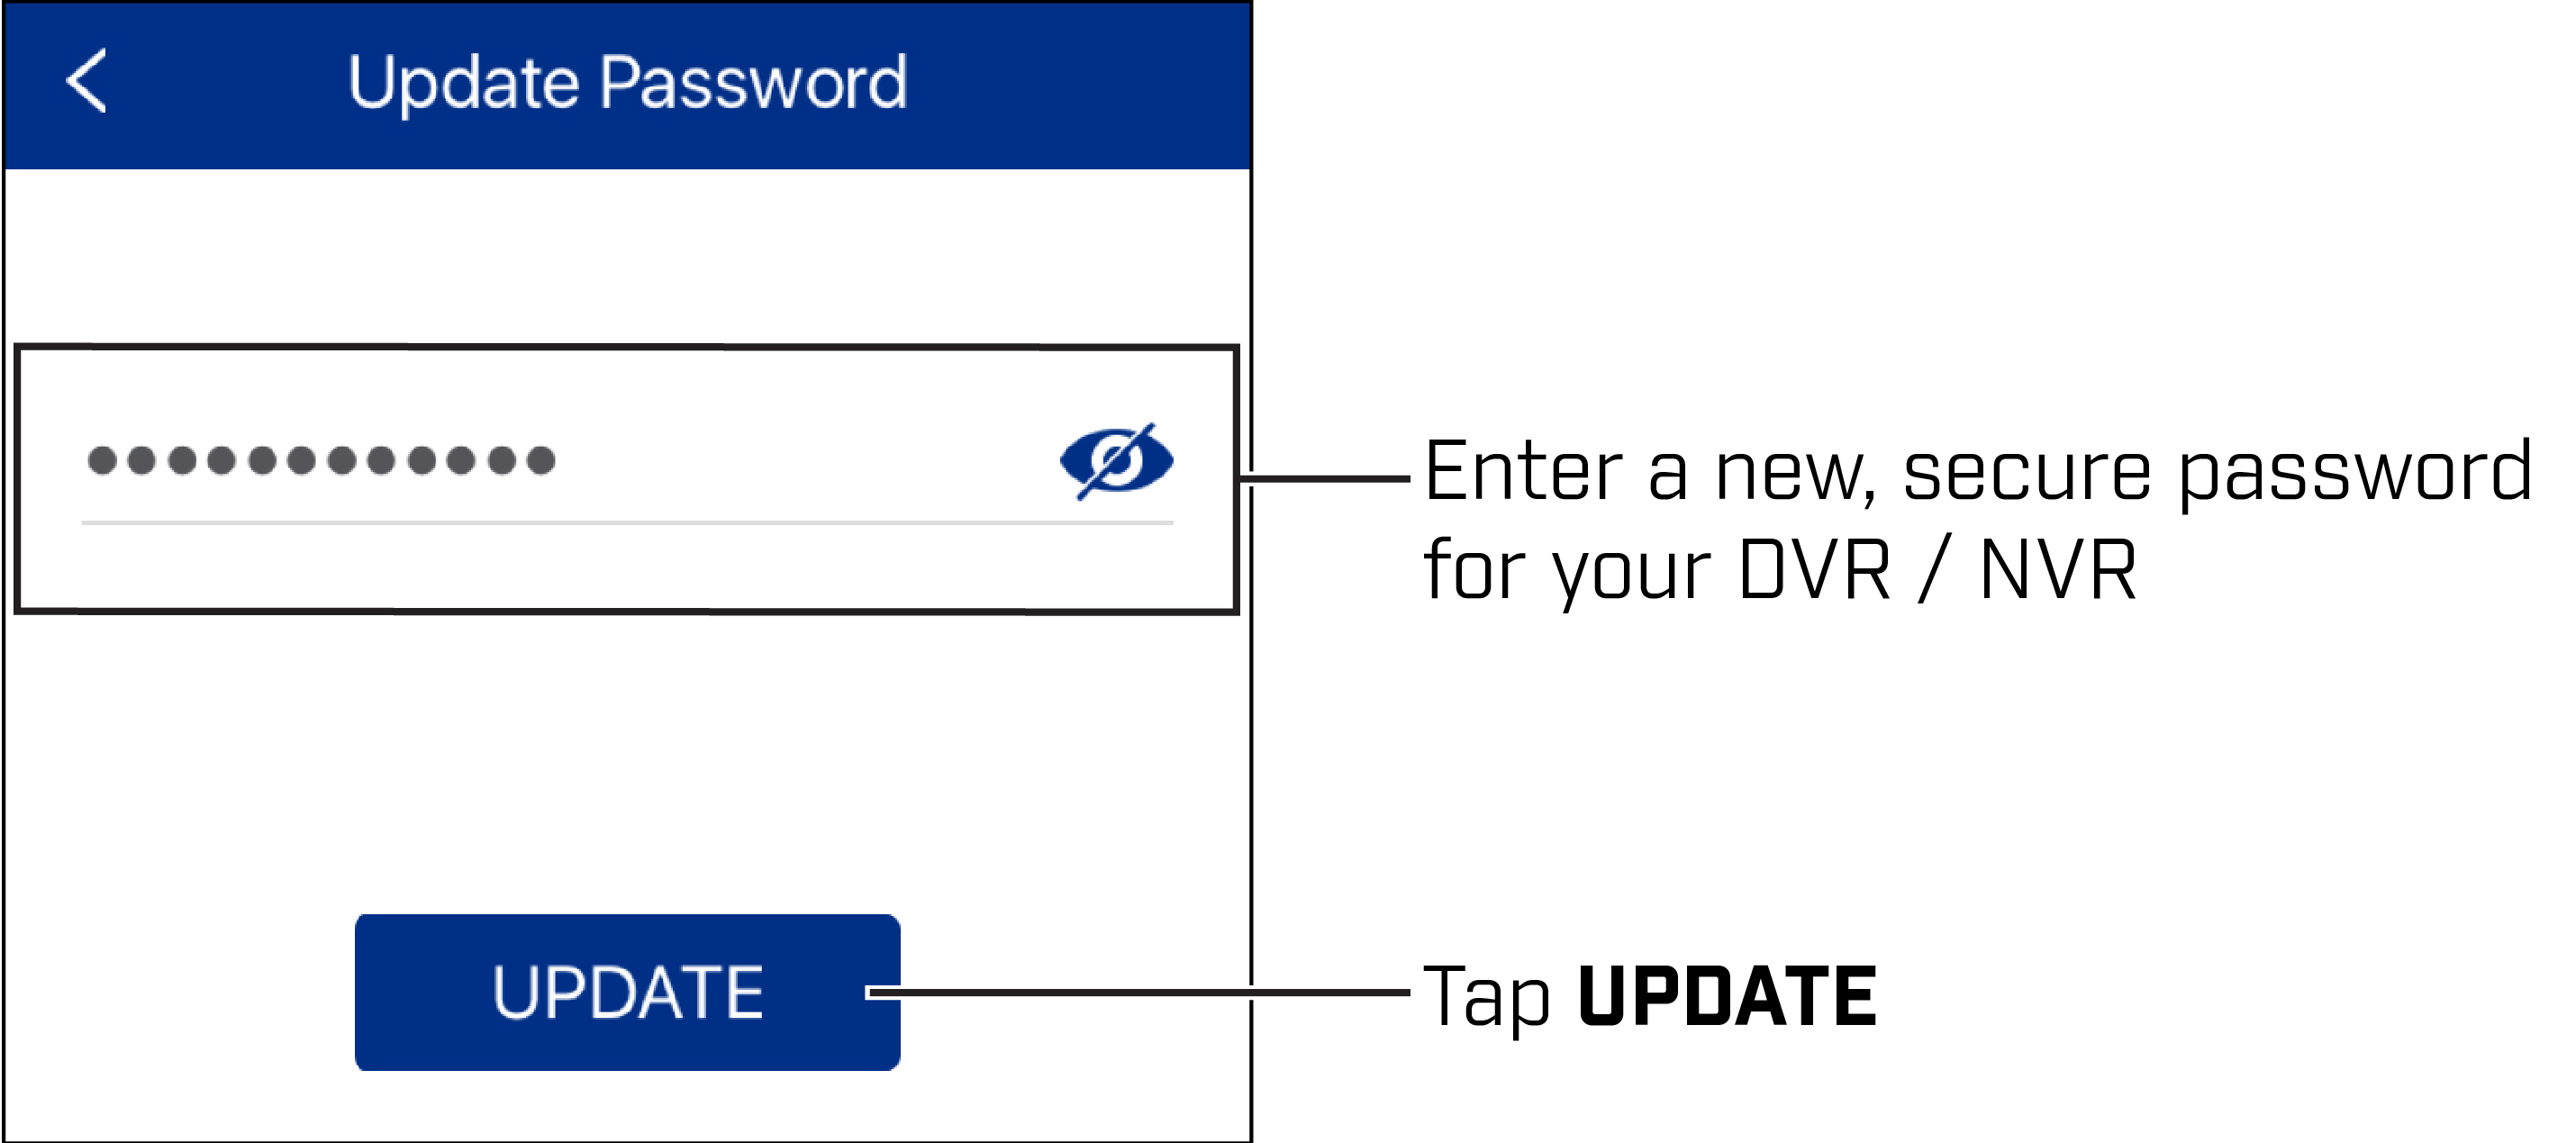 FLIR Secure App: Update Password